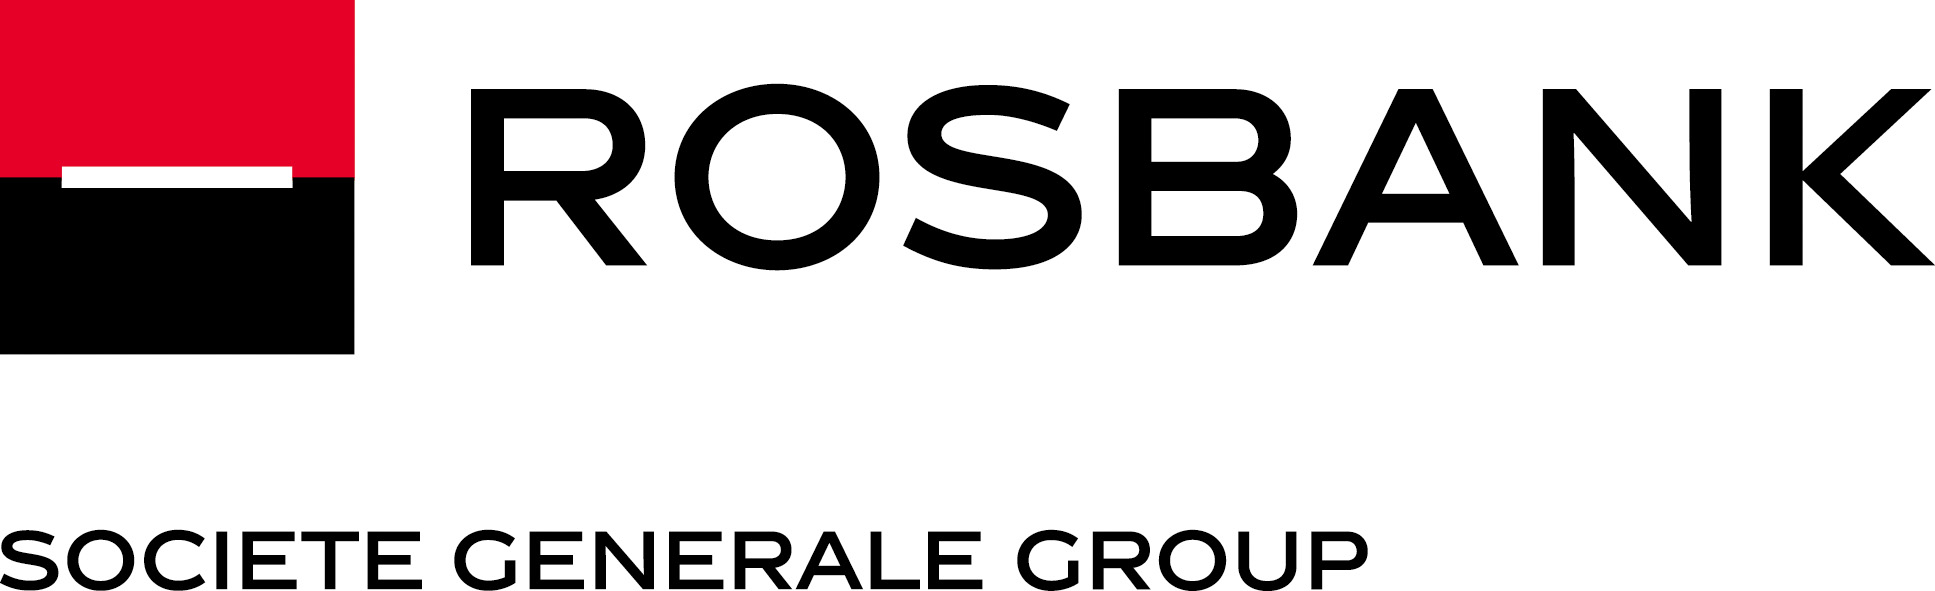 Rosbank Brand Logo